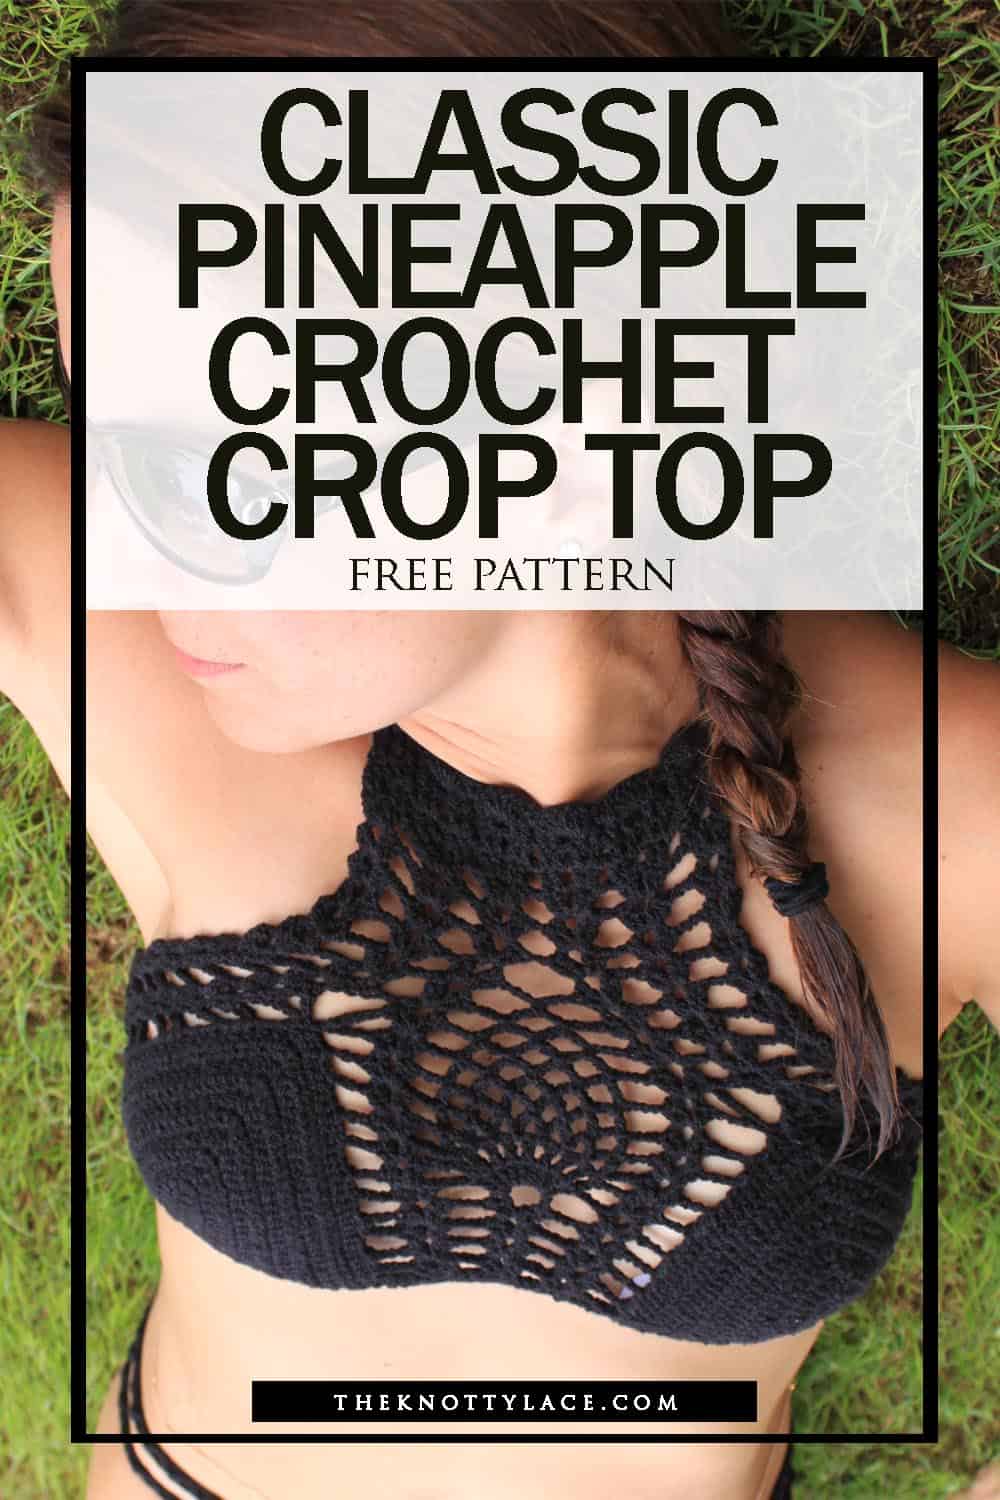 Classic pineapple crochet crop top free pattern